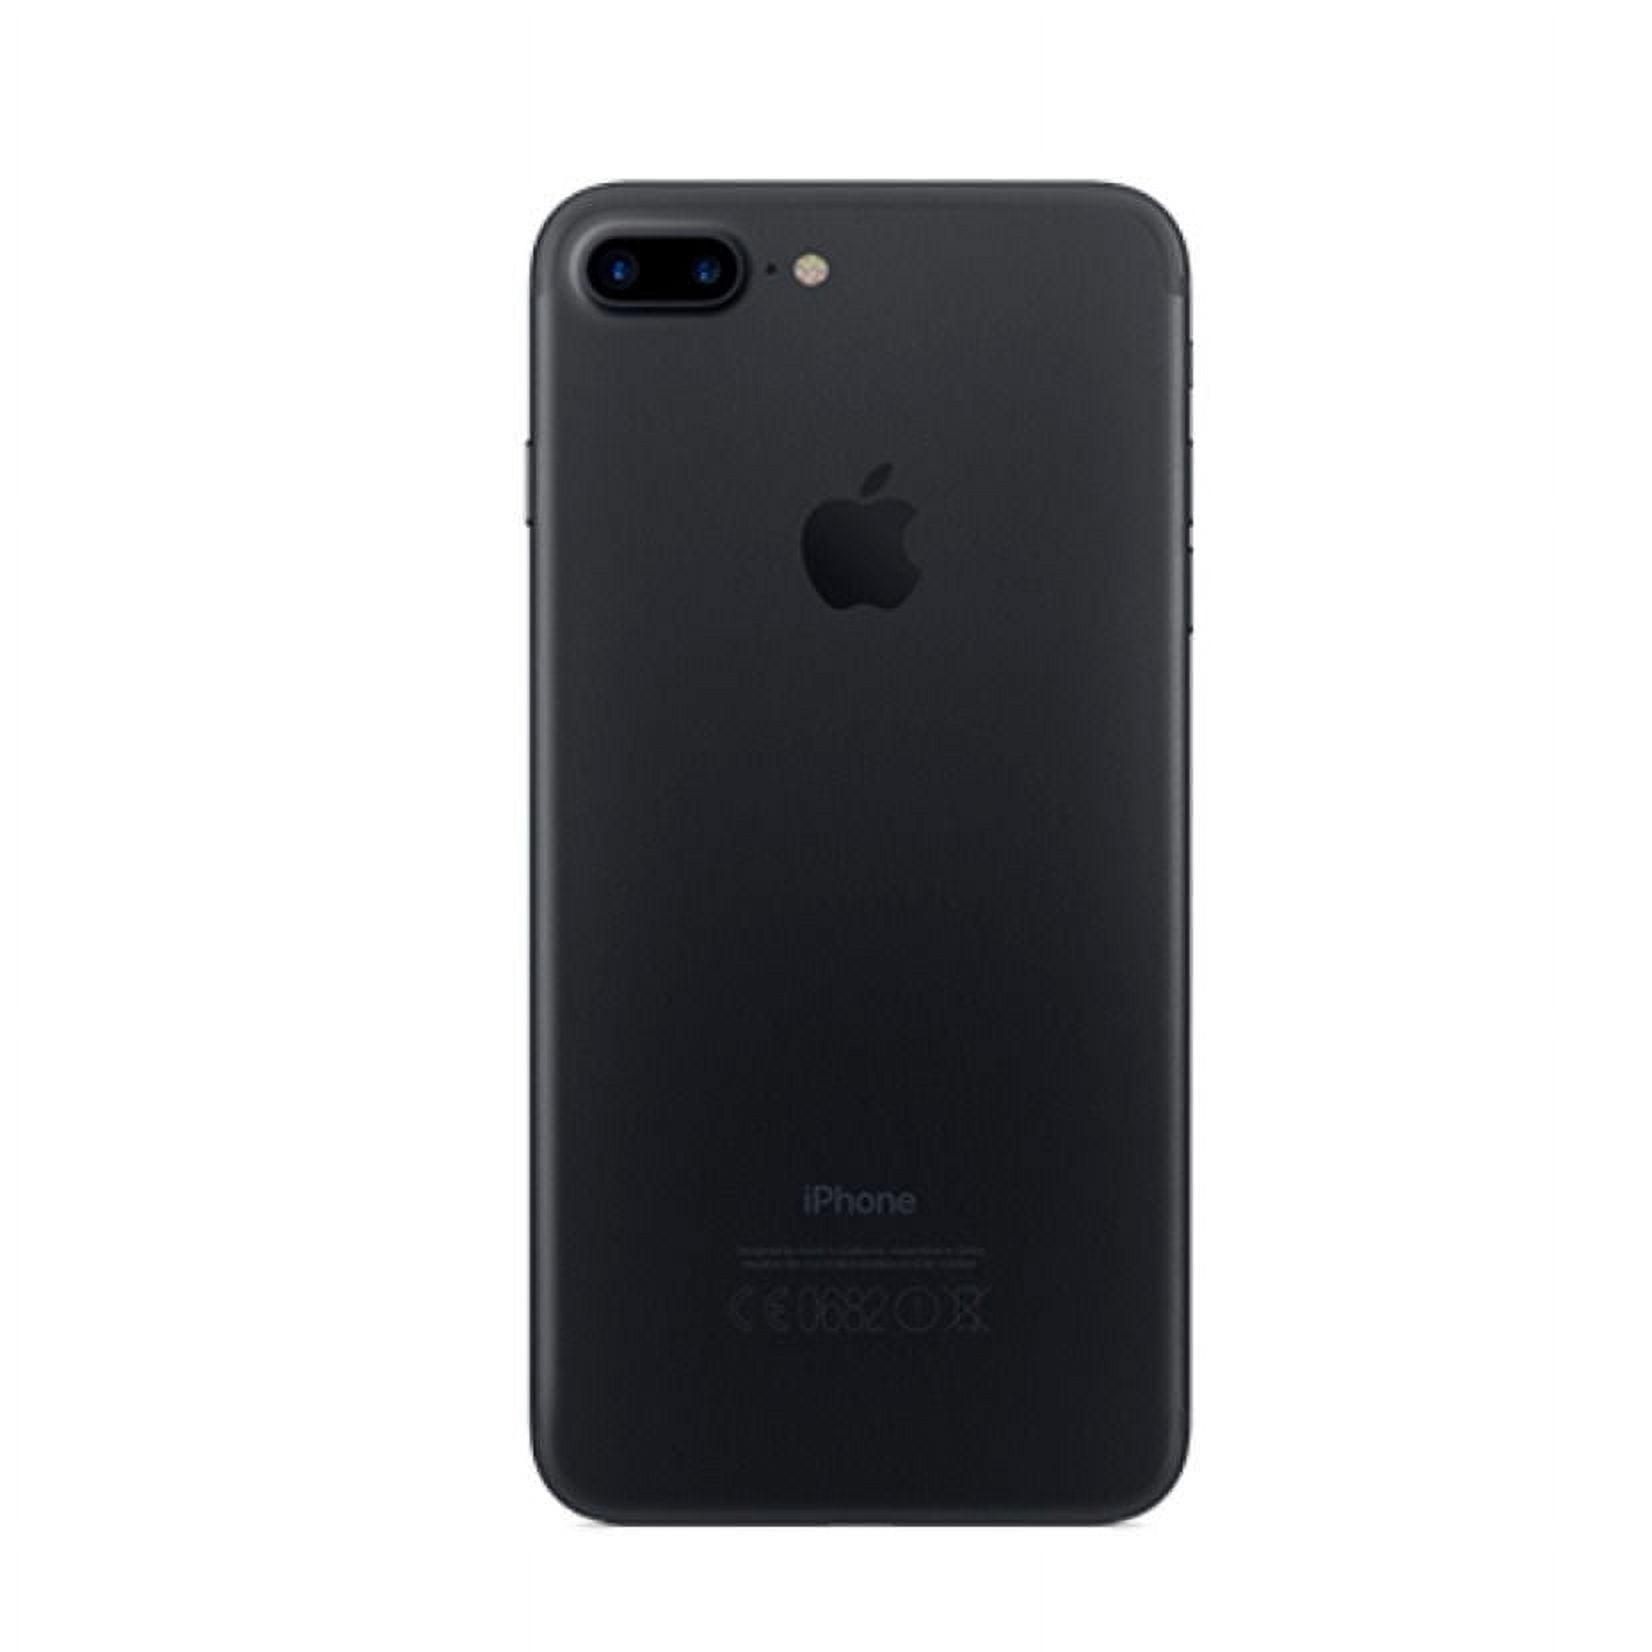 Pre-Owned Apple iPhone 7 Plus 128GB Unlocked GSM Smartphone Multi